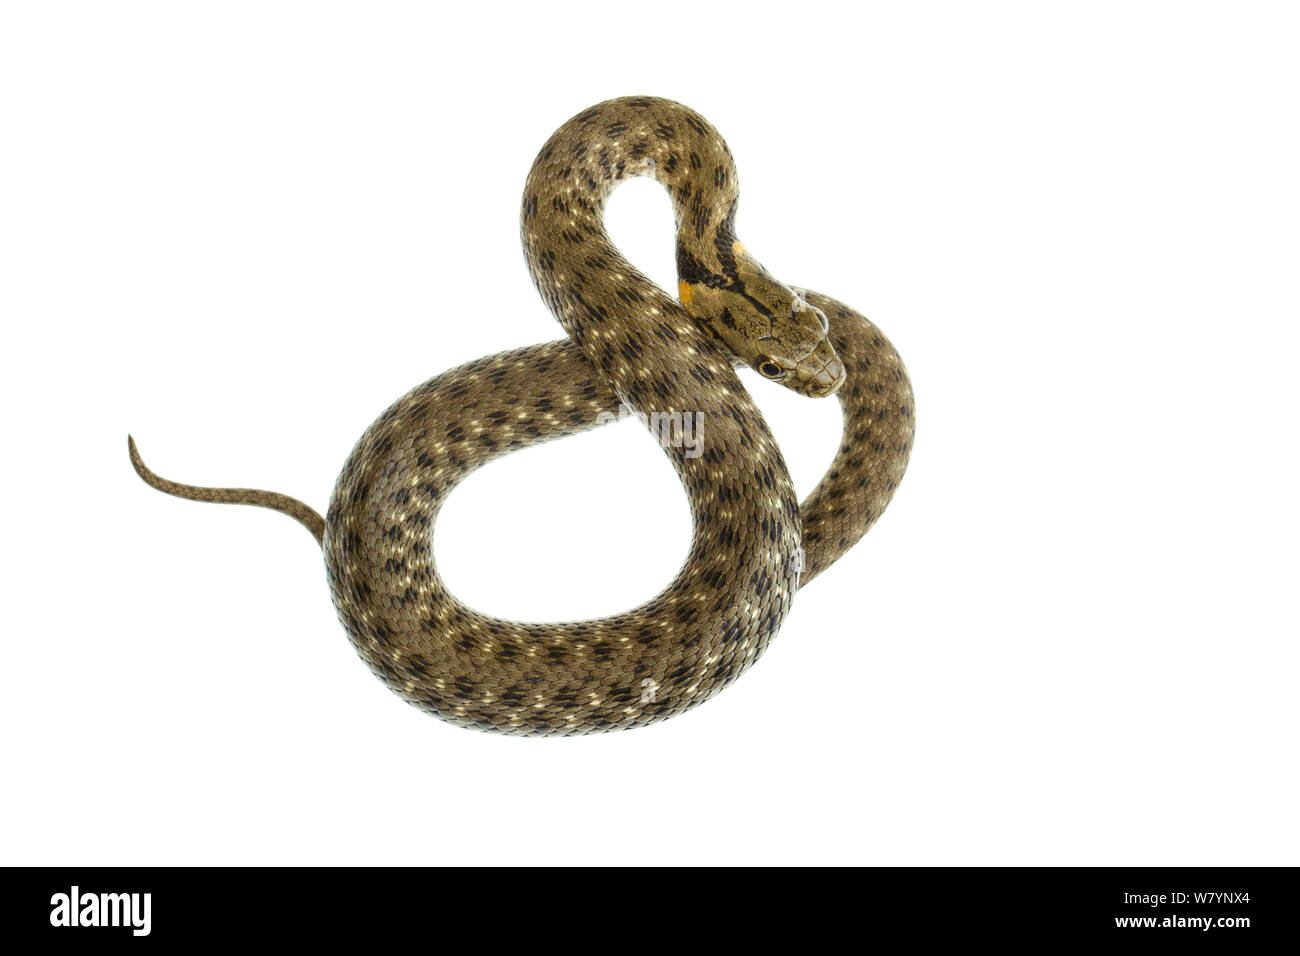 Dice snake (Natrix tessellata), Central Coastal Plain, Israel April. meetyourneighbours.net project Stock Photo